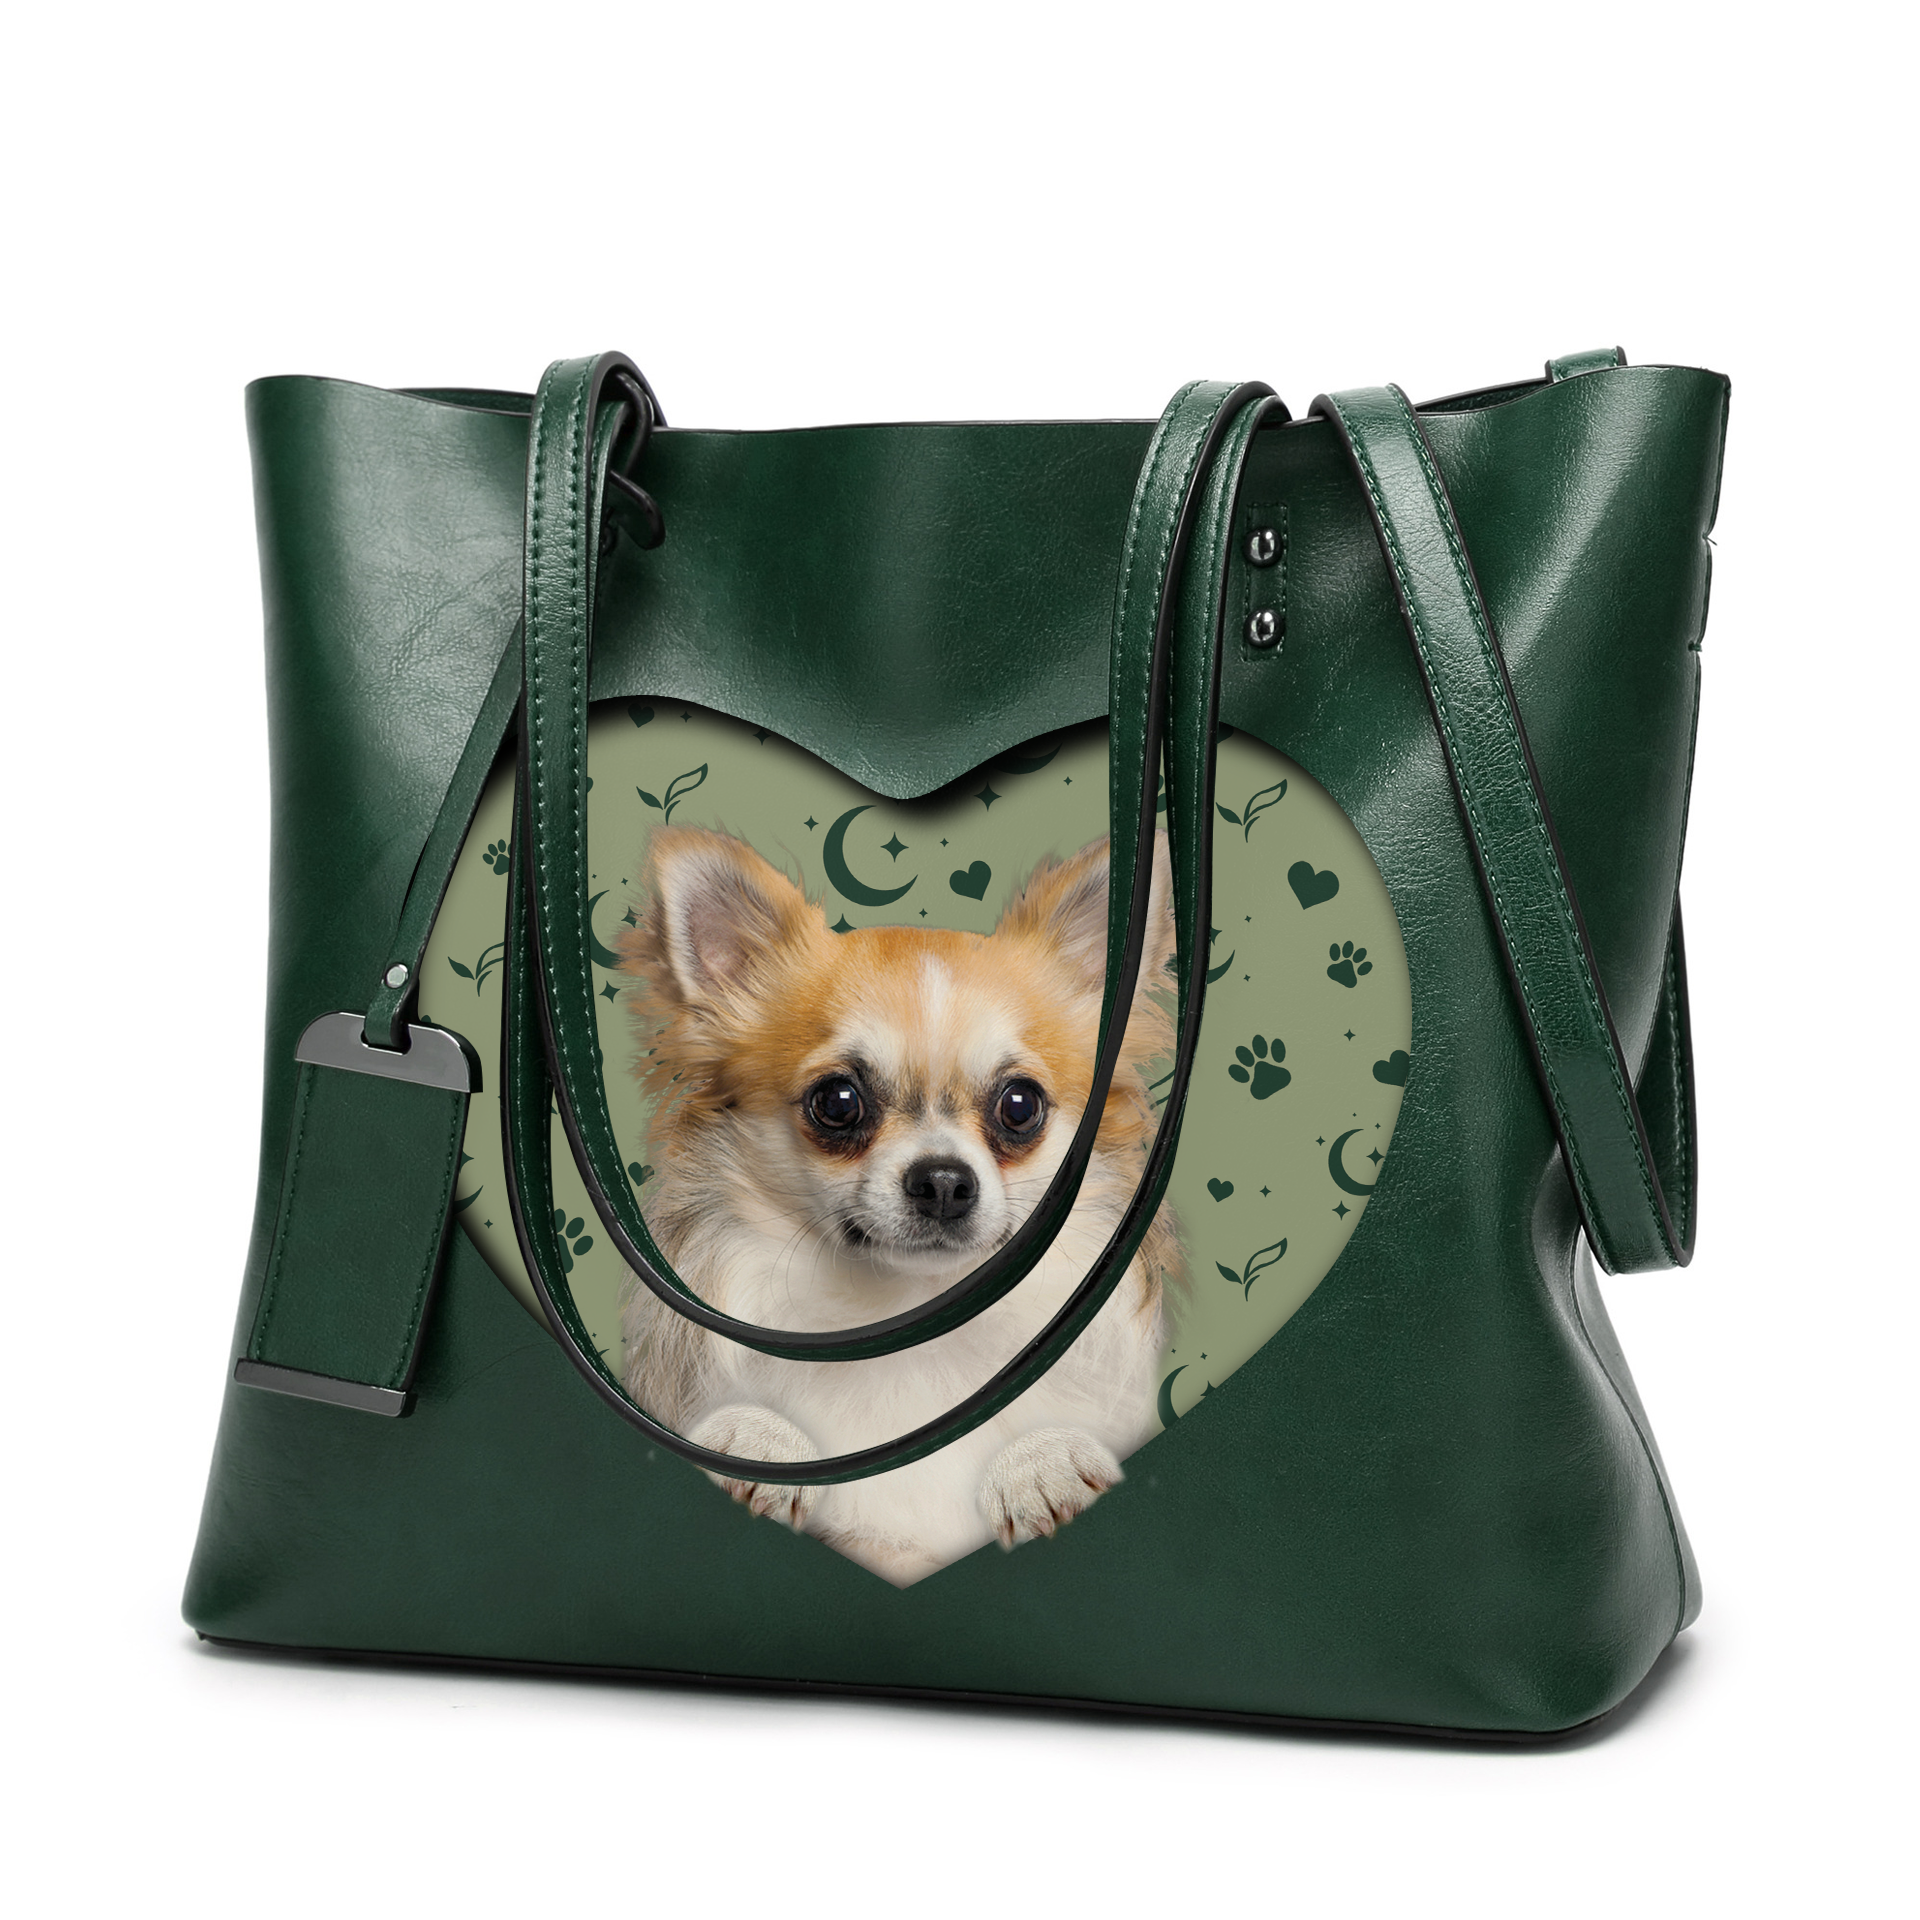 I Know I'm Cute - Chihuahua Glamour Handbag V4 - 11